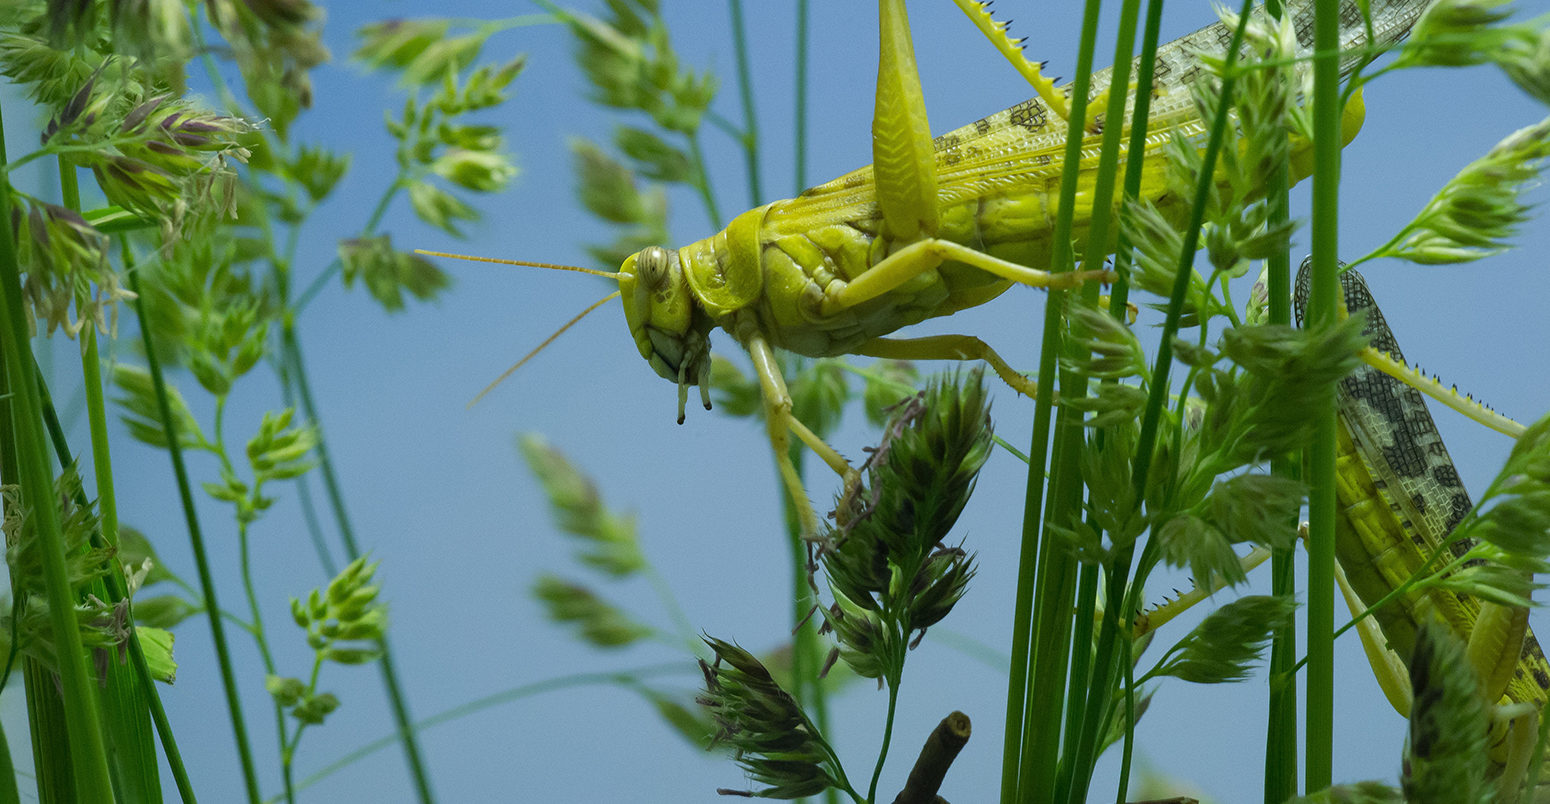 D9KNEY Desert locust (Schistocerca gregaria). Image shot 06/2013. Exact date unknown.